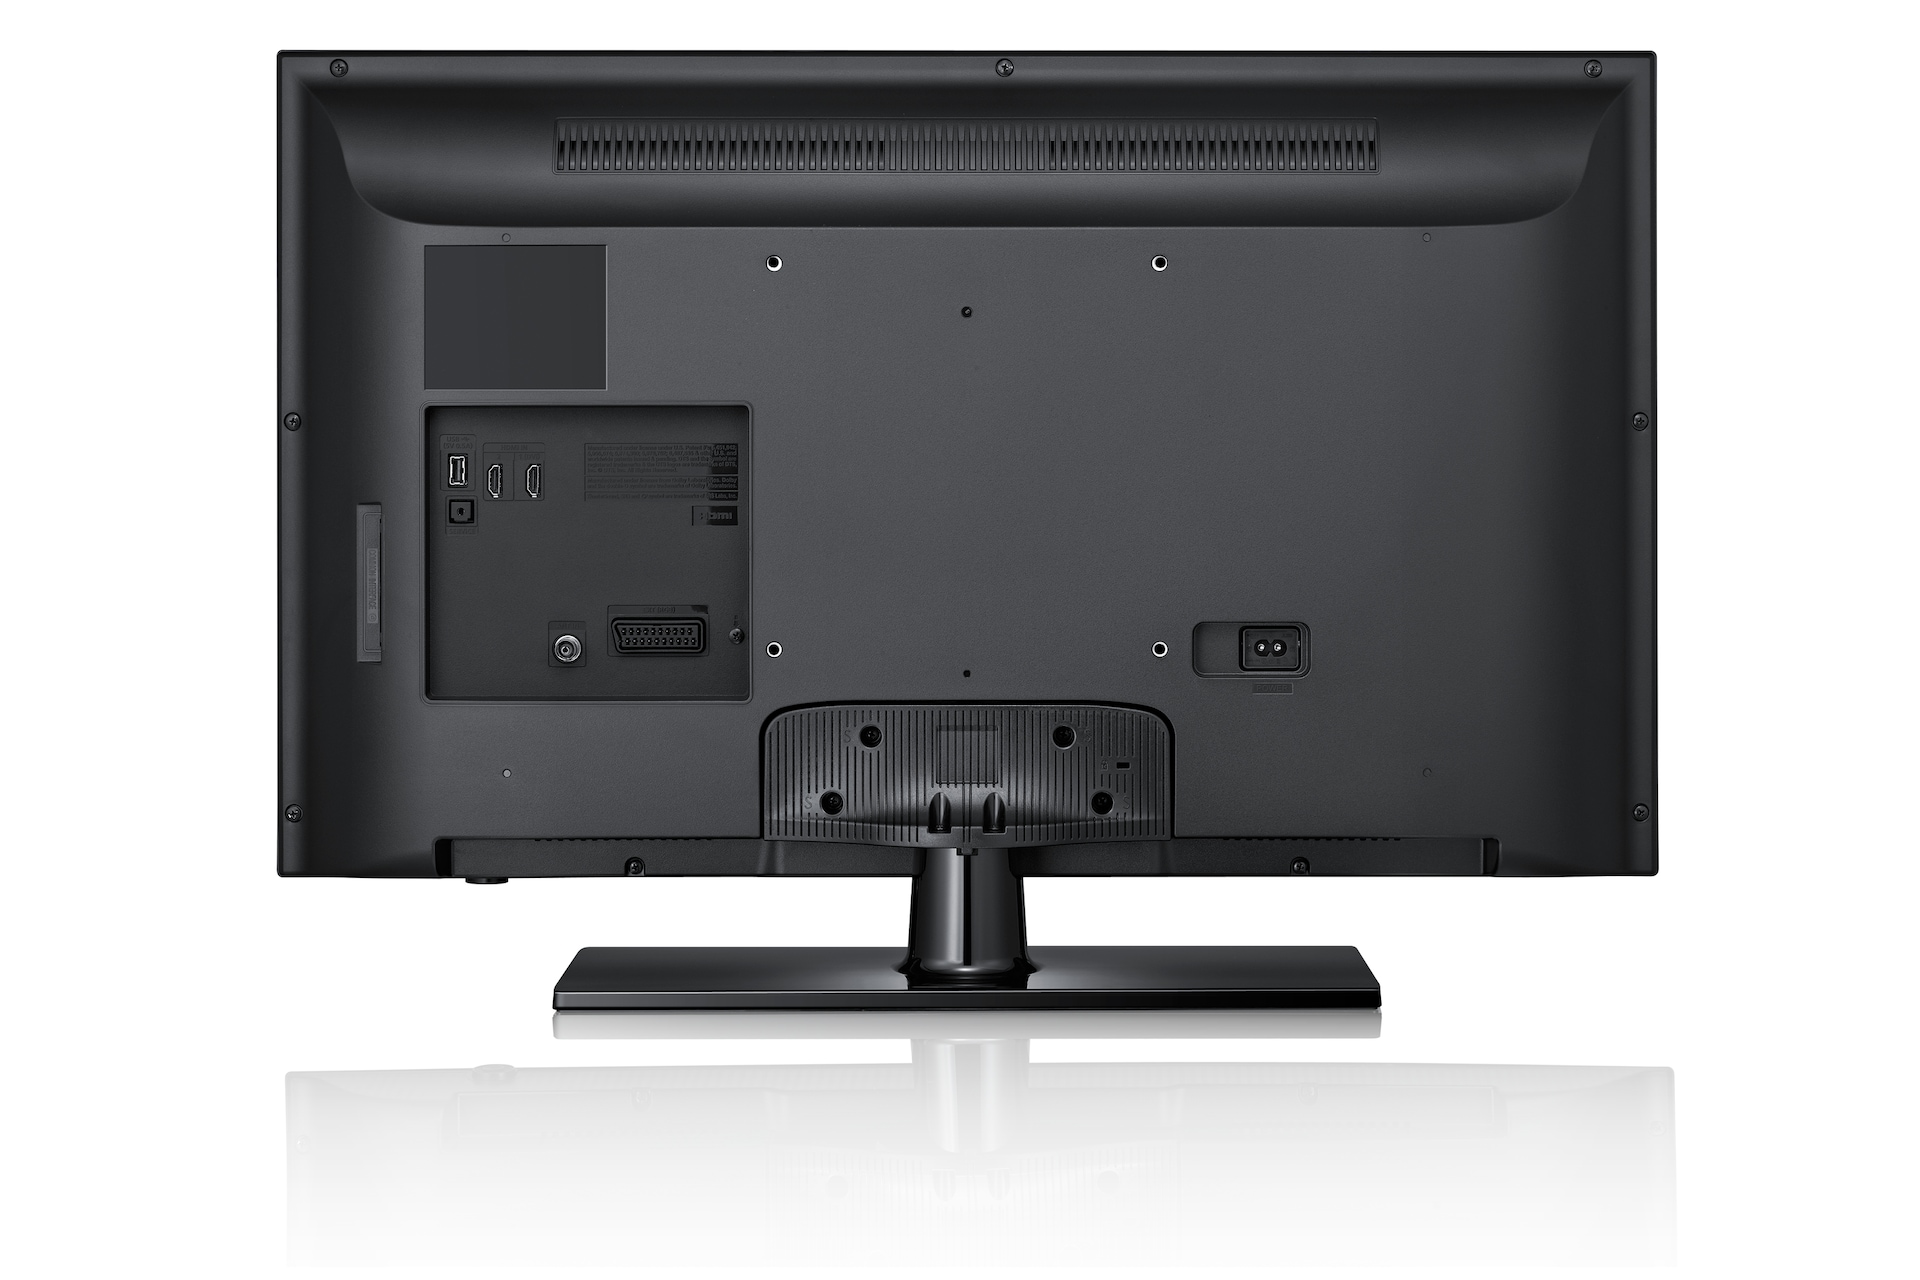 Samsung LED TV 32 Inch Price India, USB LED TV Specs